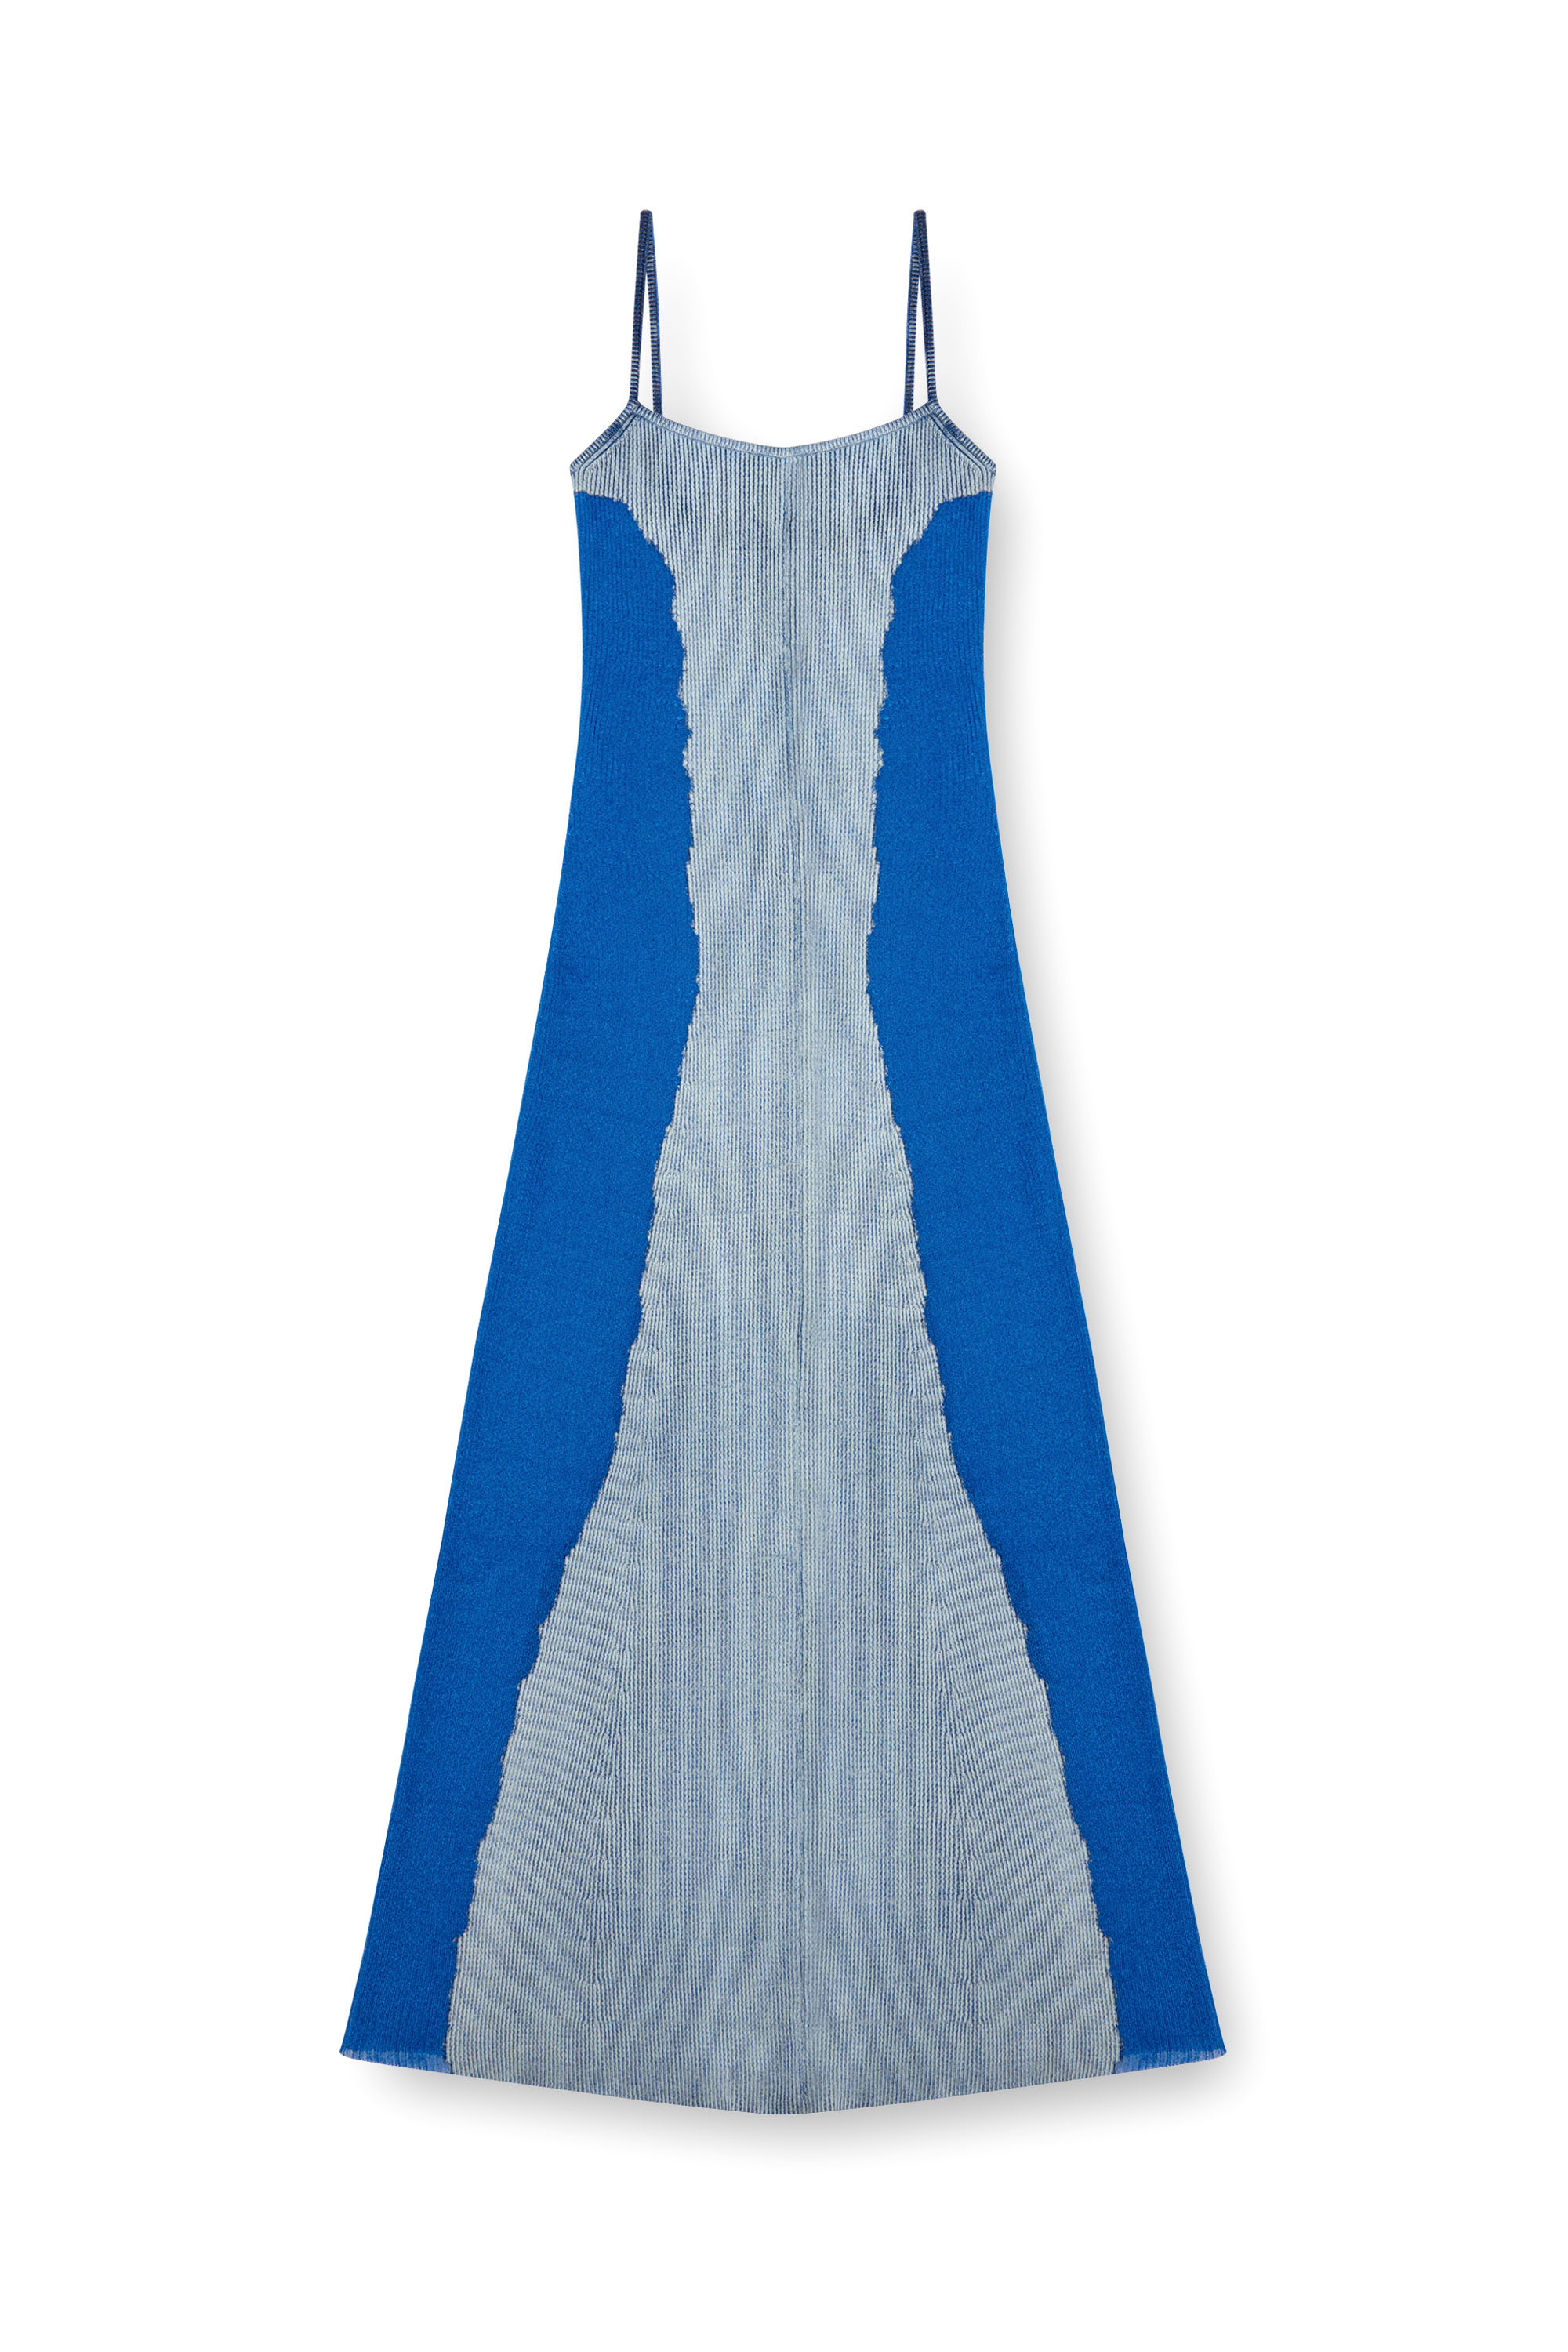 Diesel - M-EDAGLIA, Femme Robe nuisette midi en maille dévorée in Bleu - Image 2